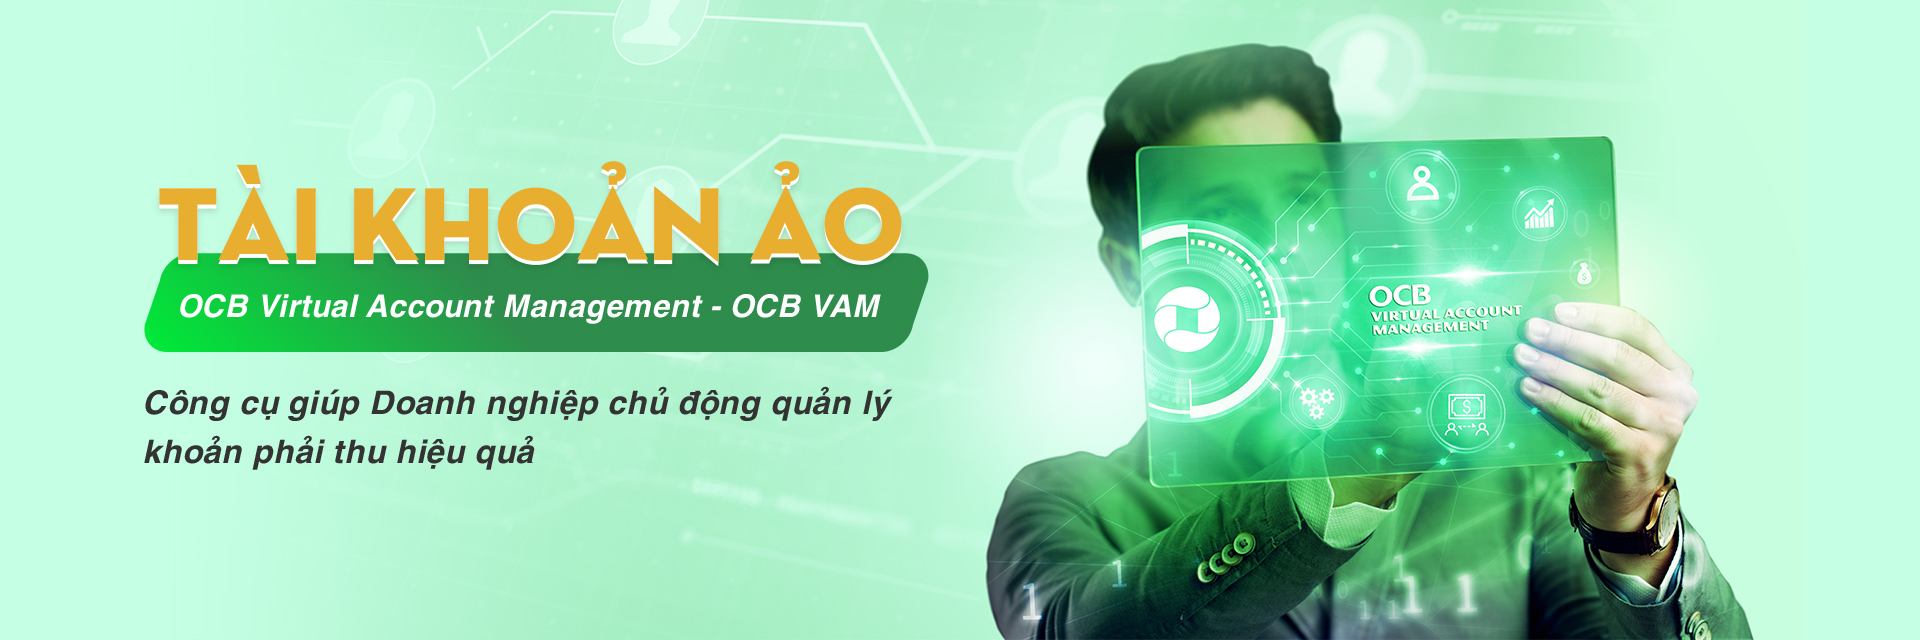 OCB VA - OCB Virtual Account Management